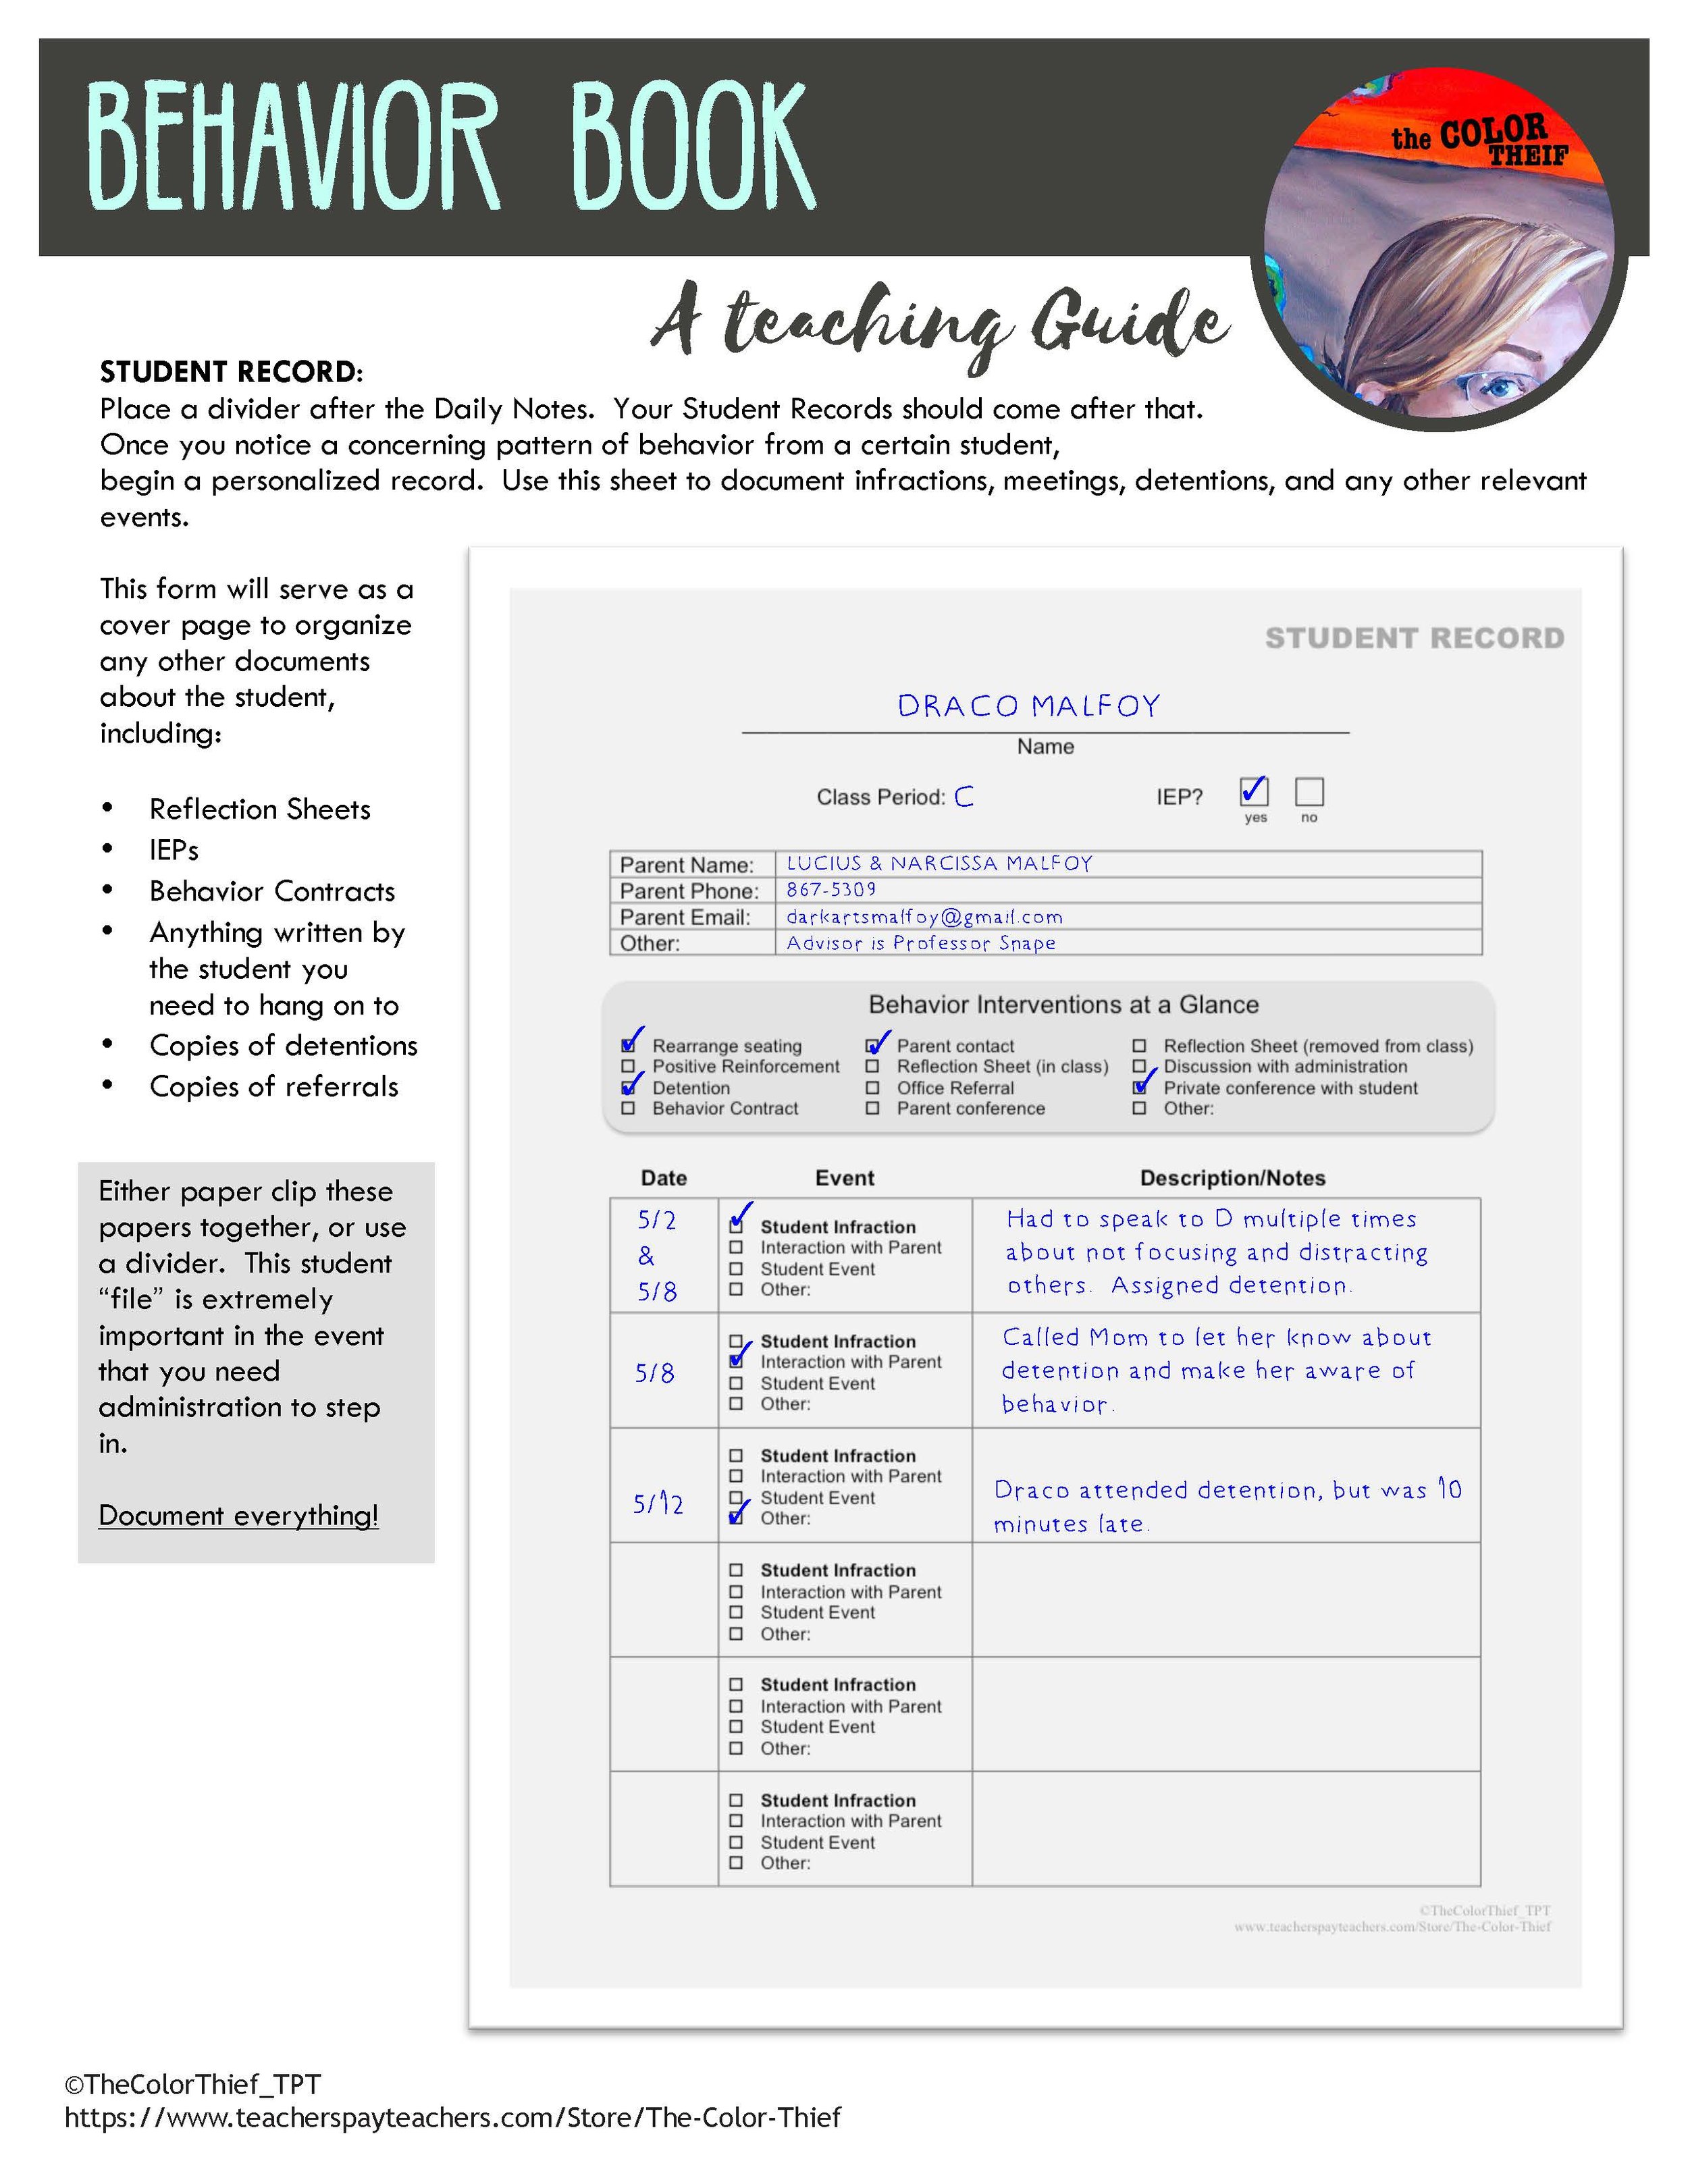 Behavior Book Teaching Guide 1_Page_3.jpg